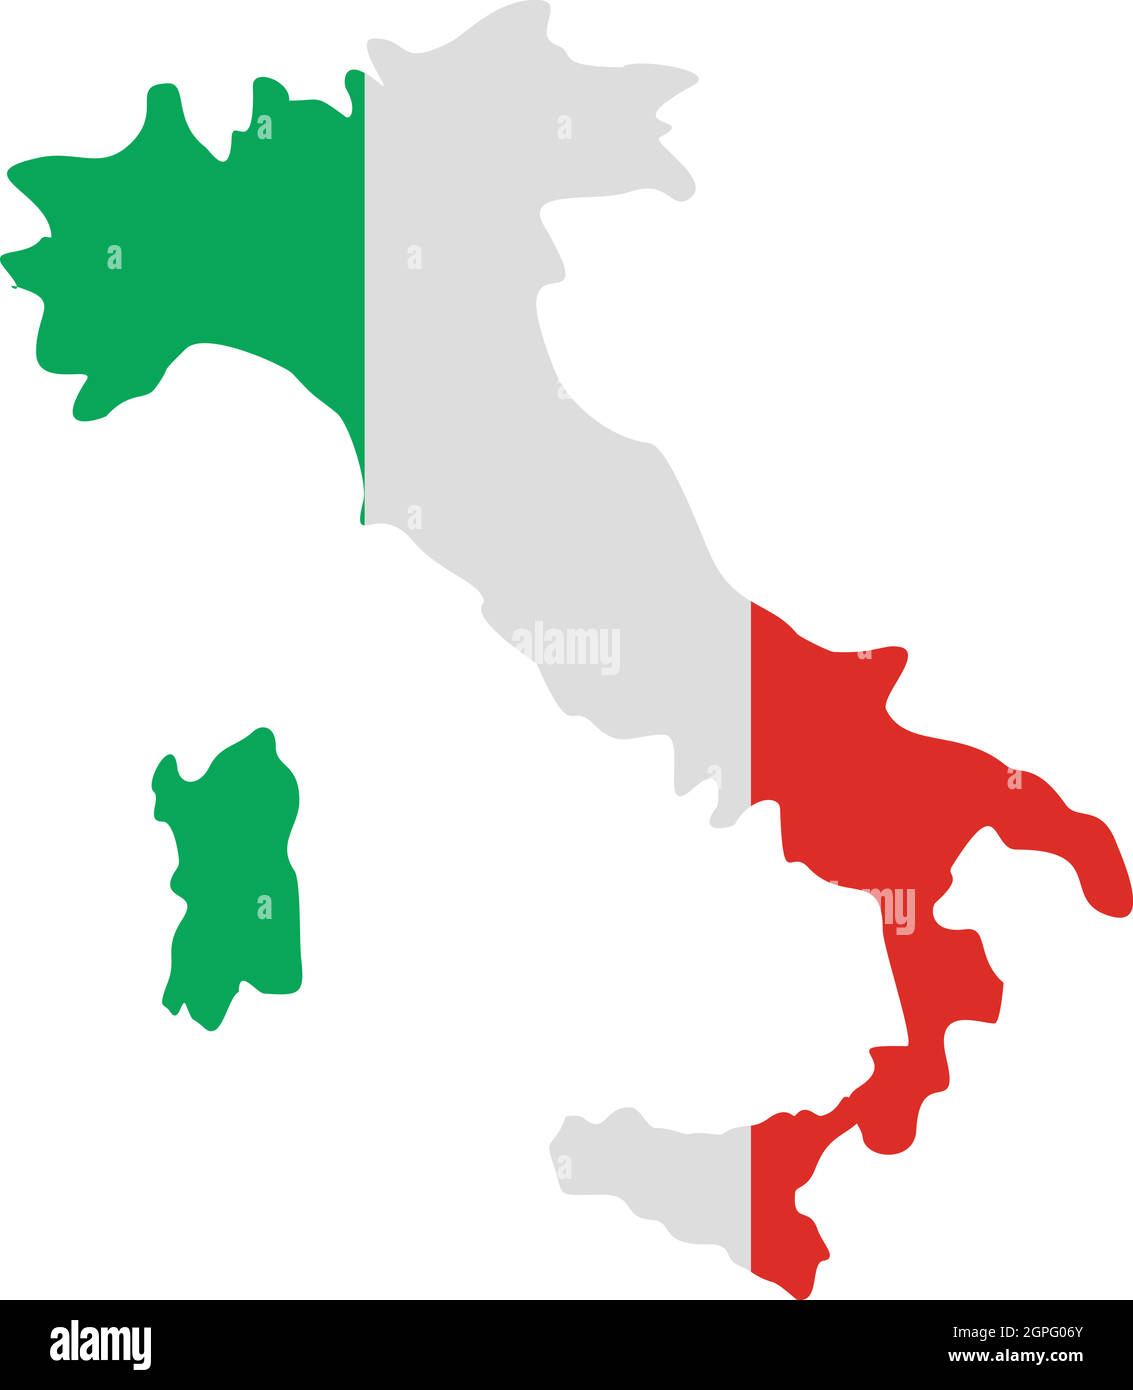 Bota de italia Imágenes vectoriales de stock - Alamy